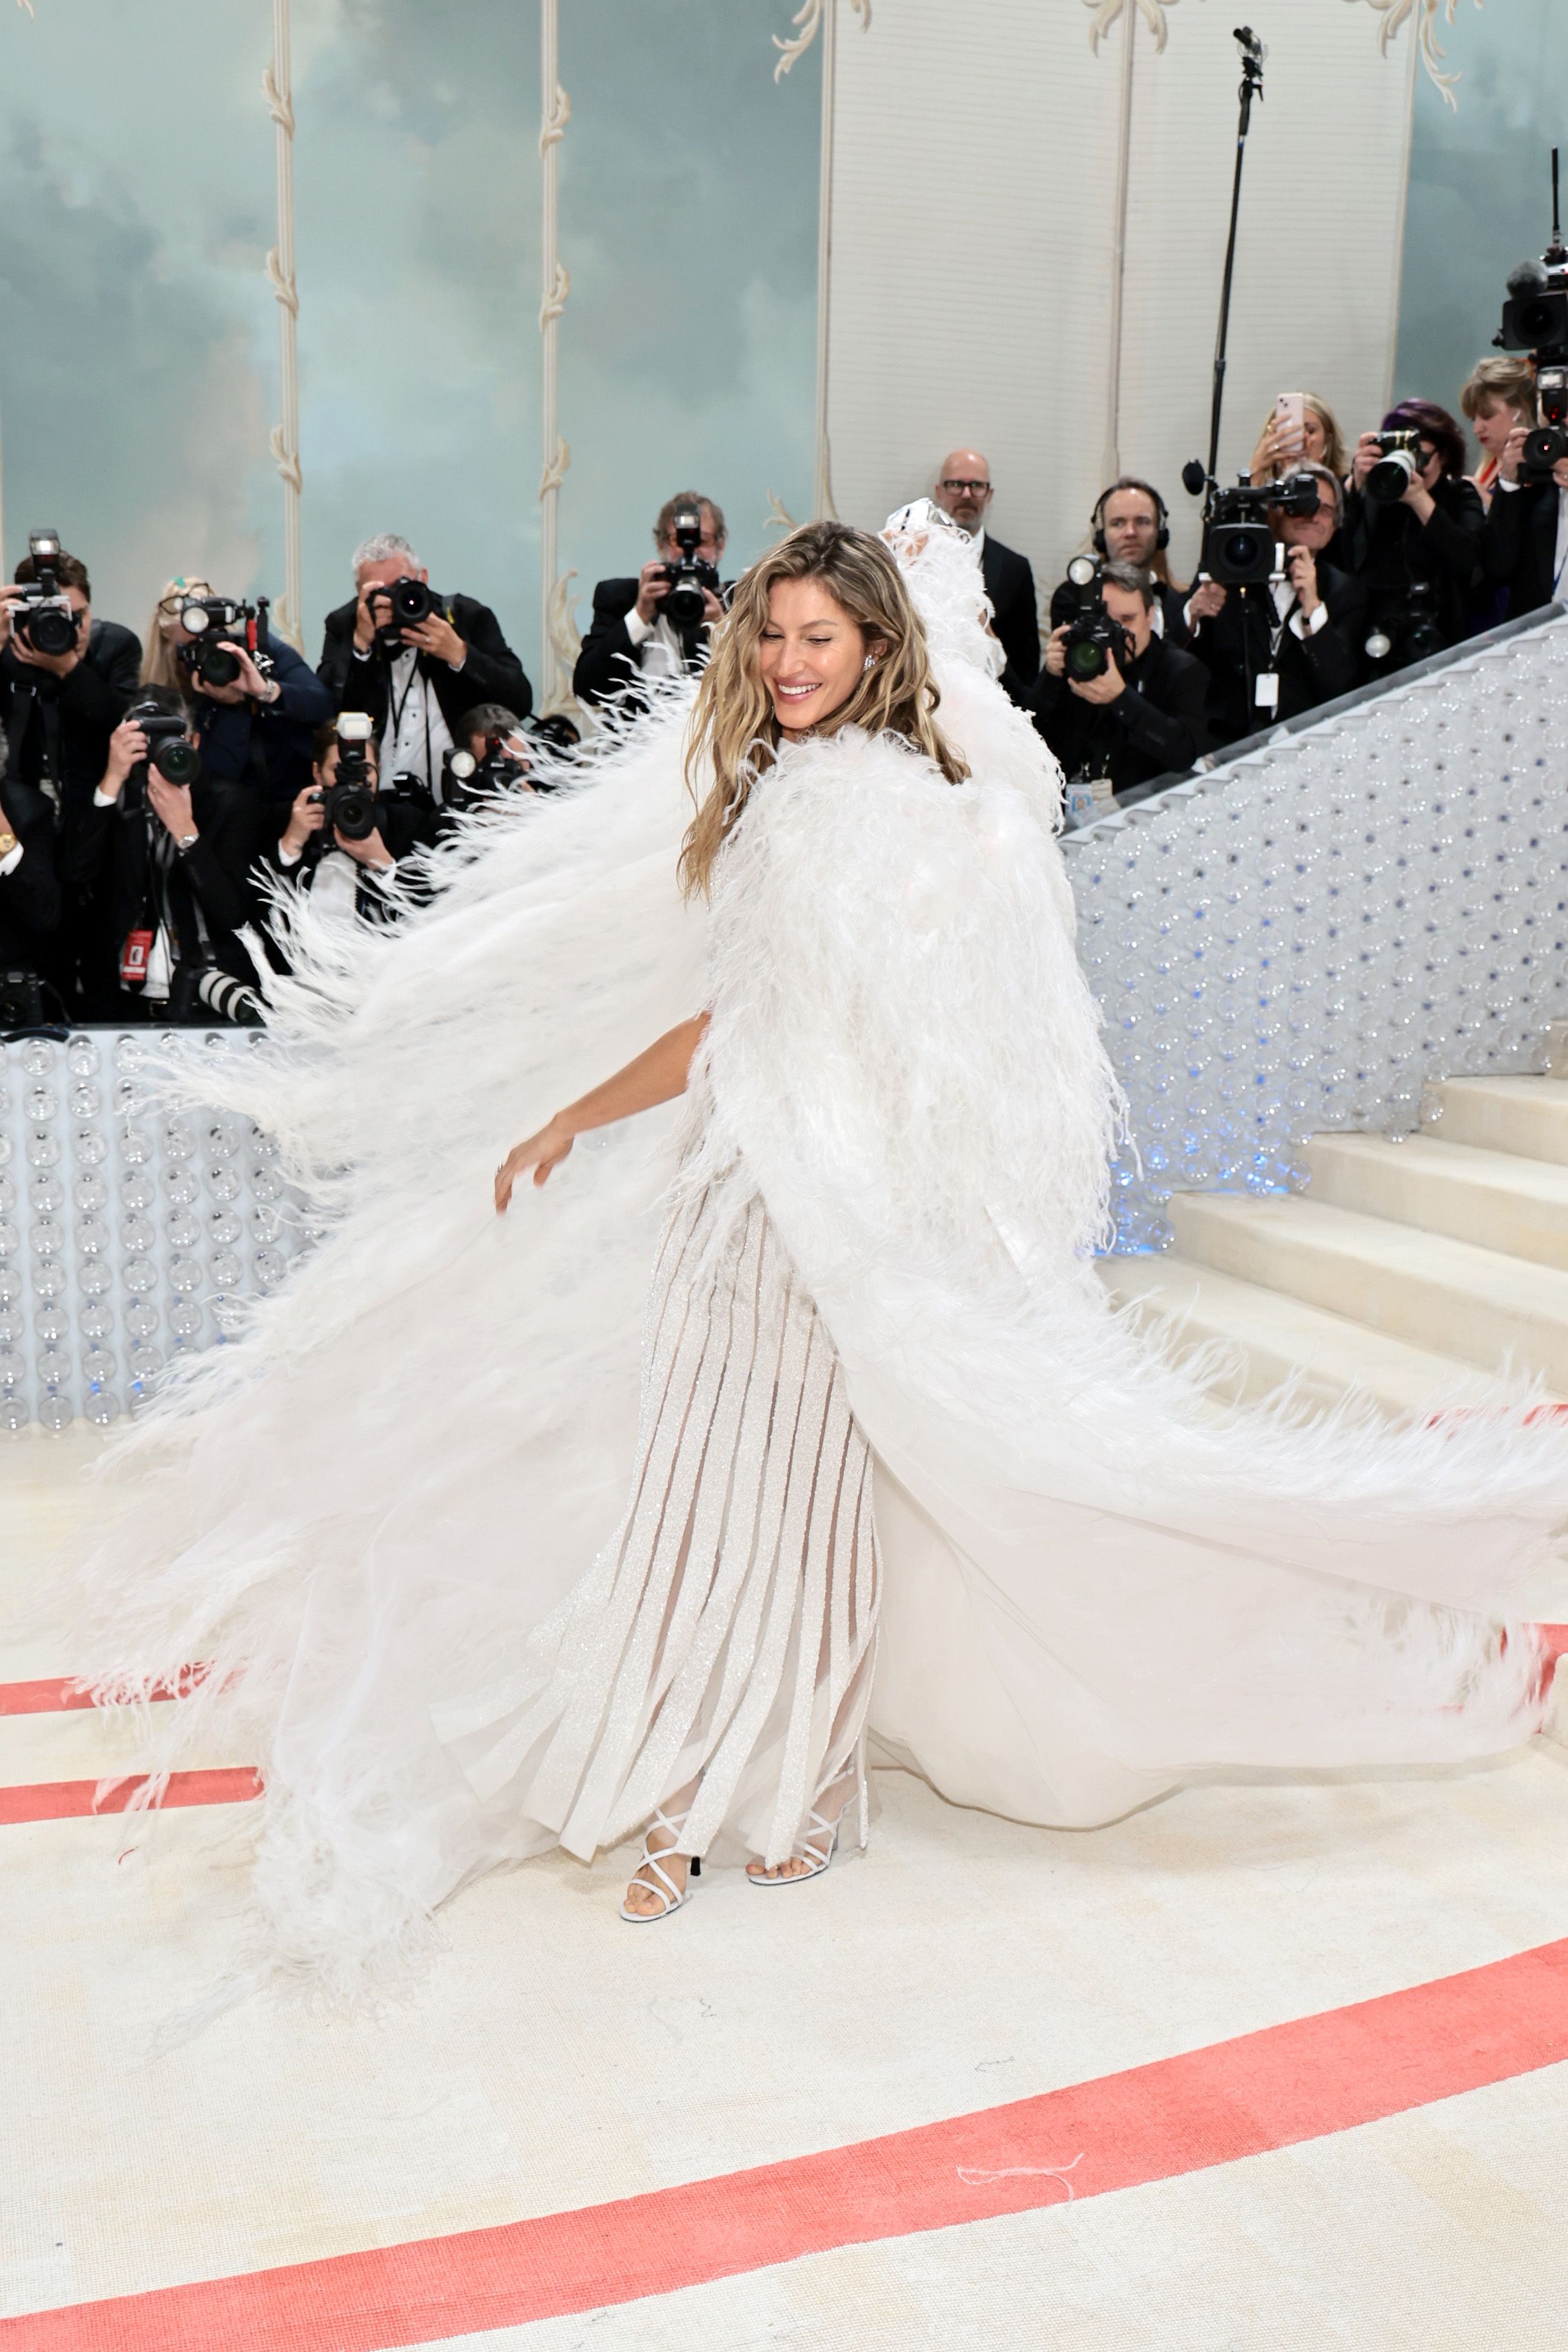 Gisele Bündchen Wore Vintage Chanel Bridal Dress to the 2023 Met Gala